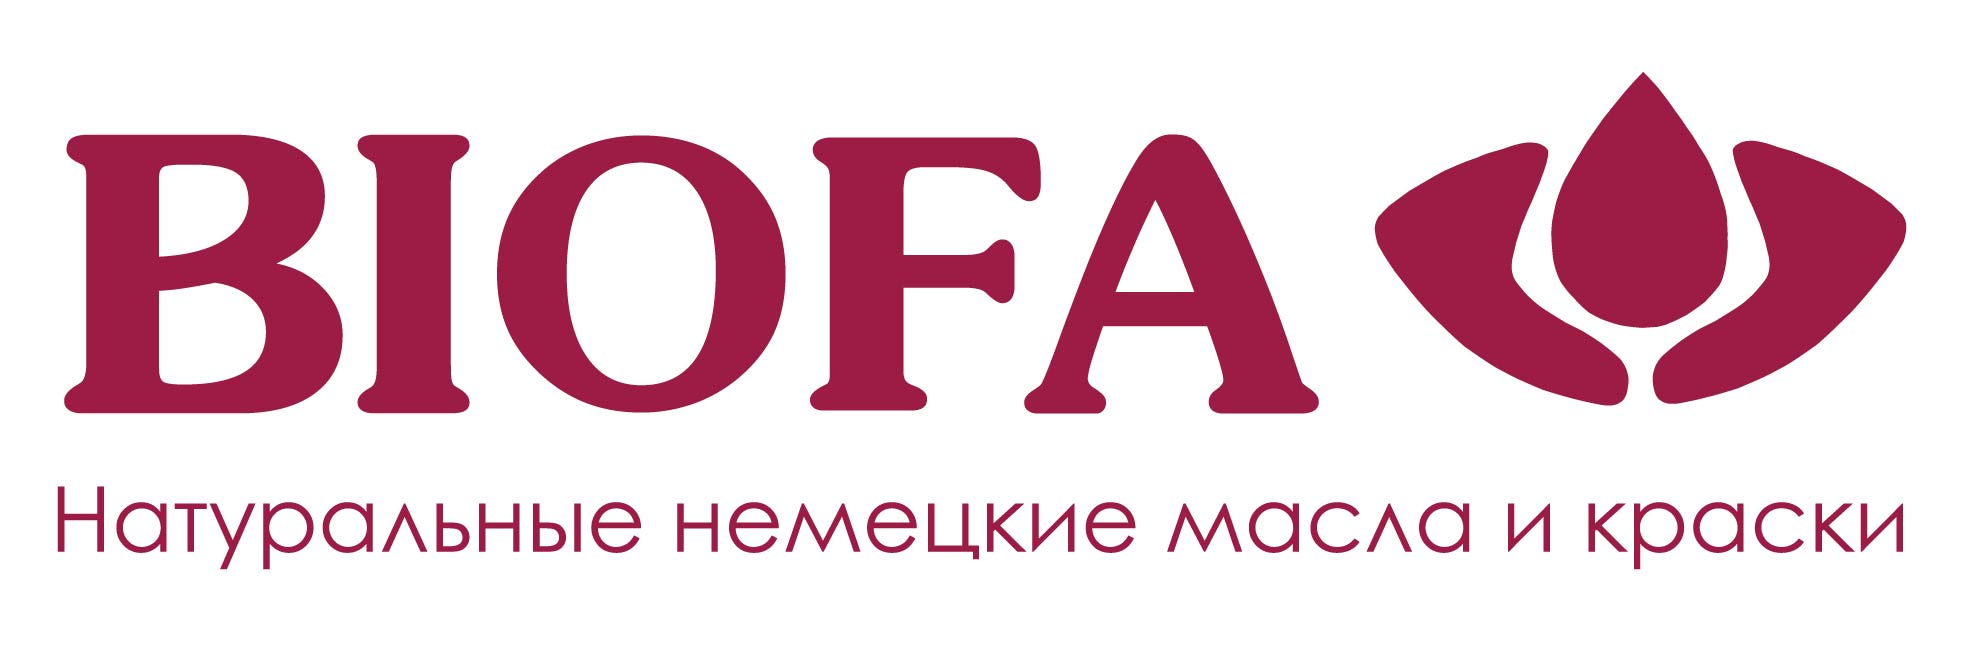 biofa logo